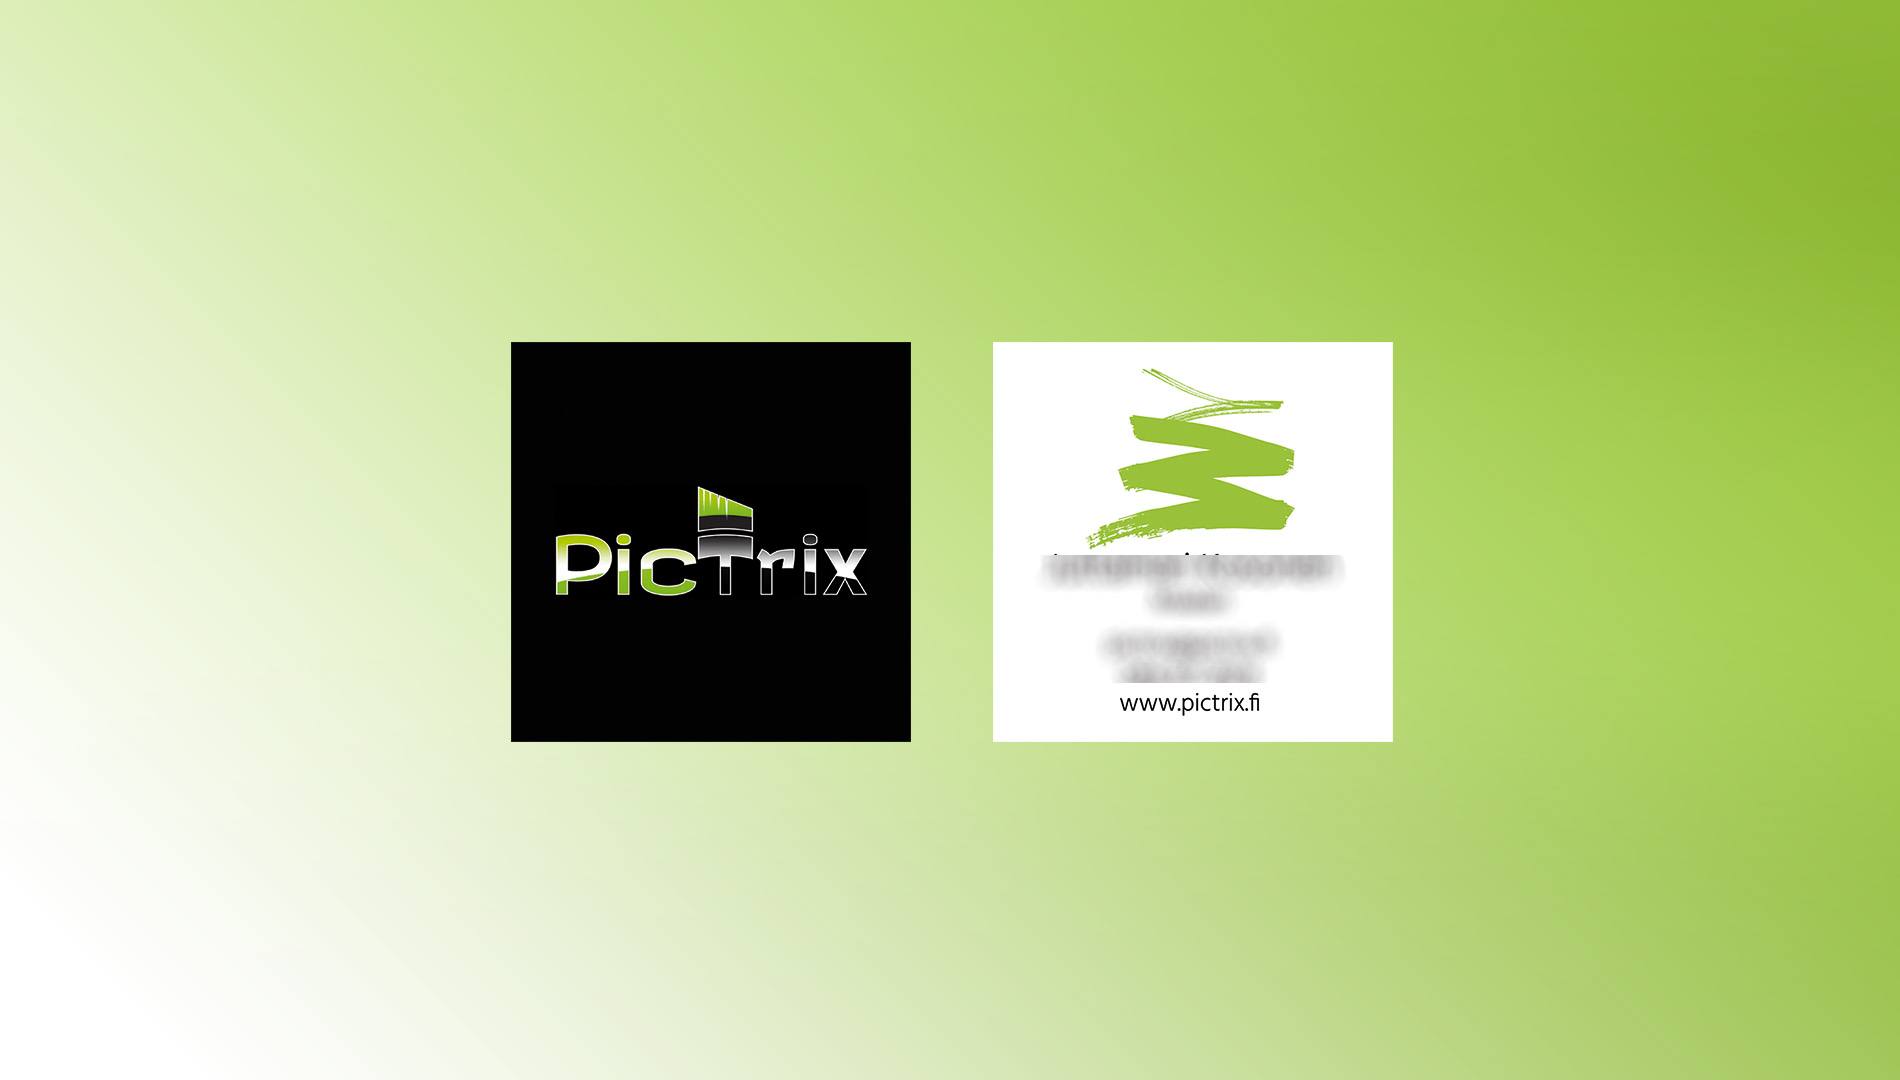 Pictrix business card